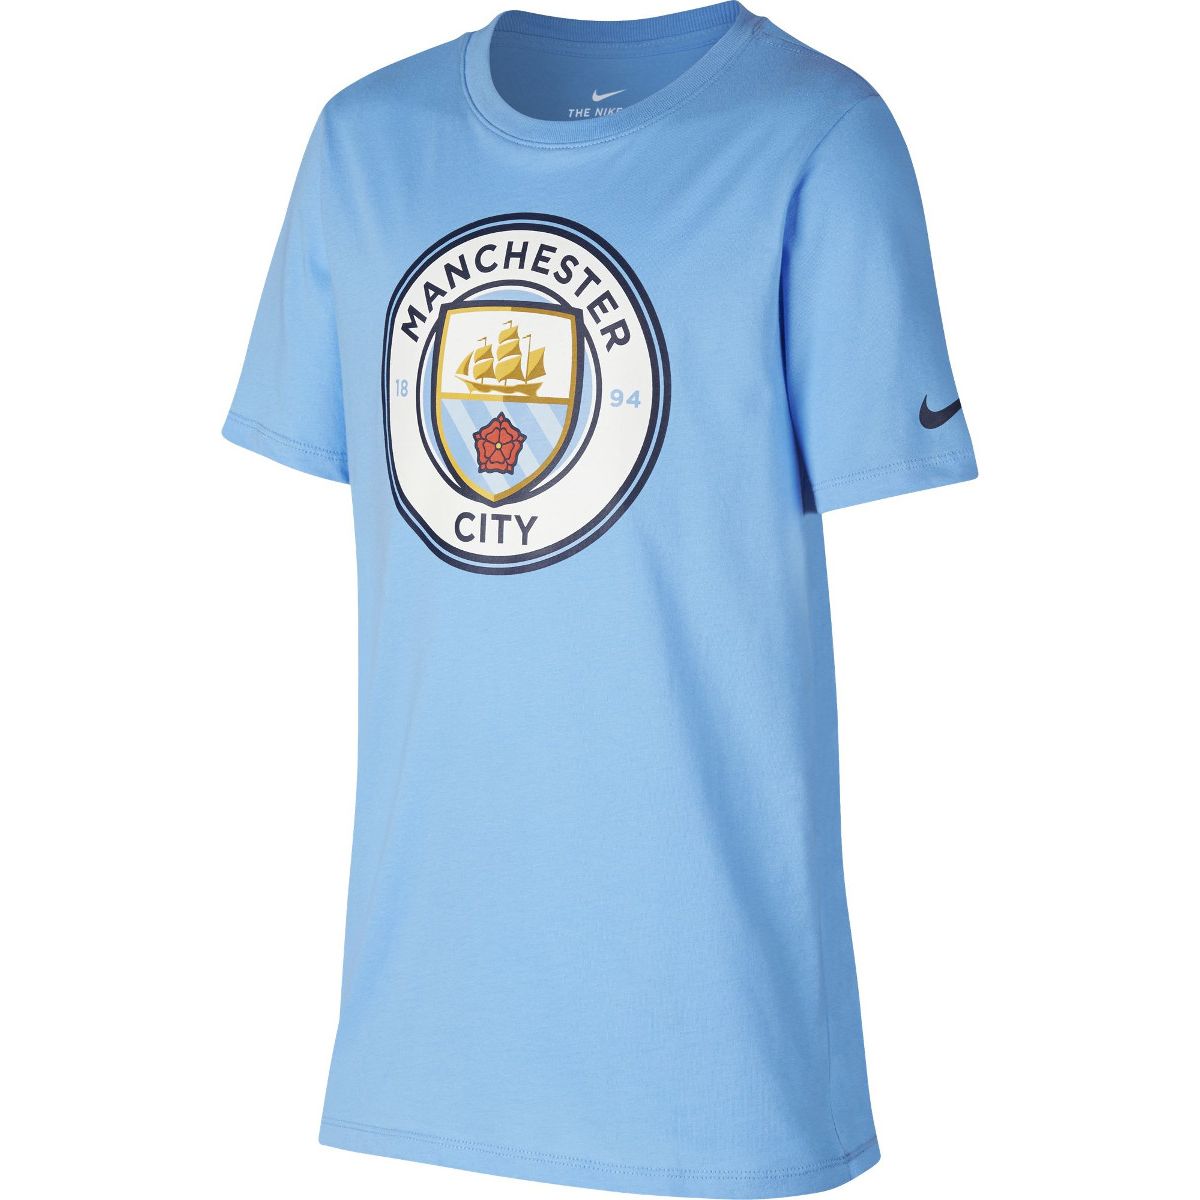 Nike Manchester City FC Boy's T-Shirt 898630-488